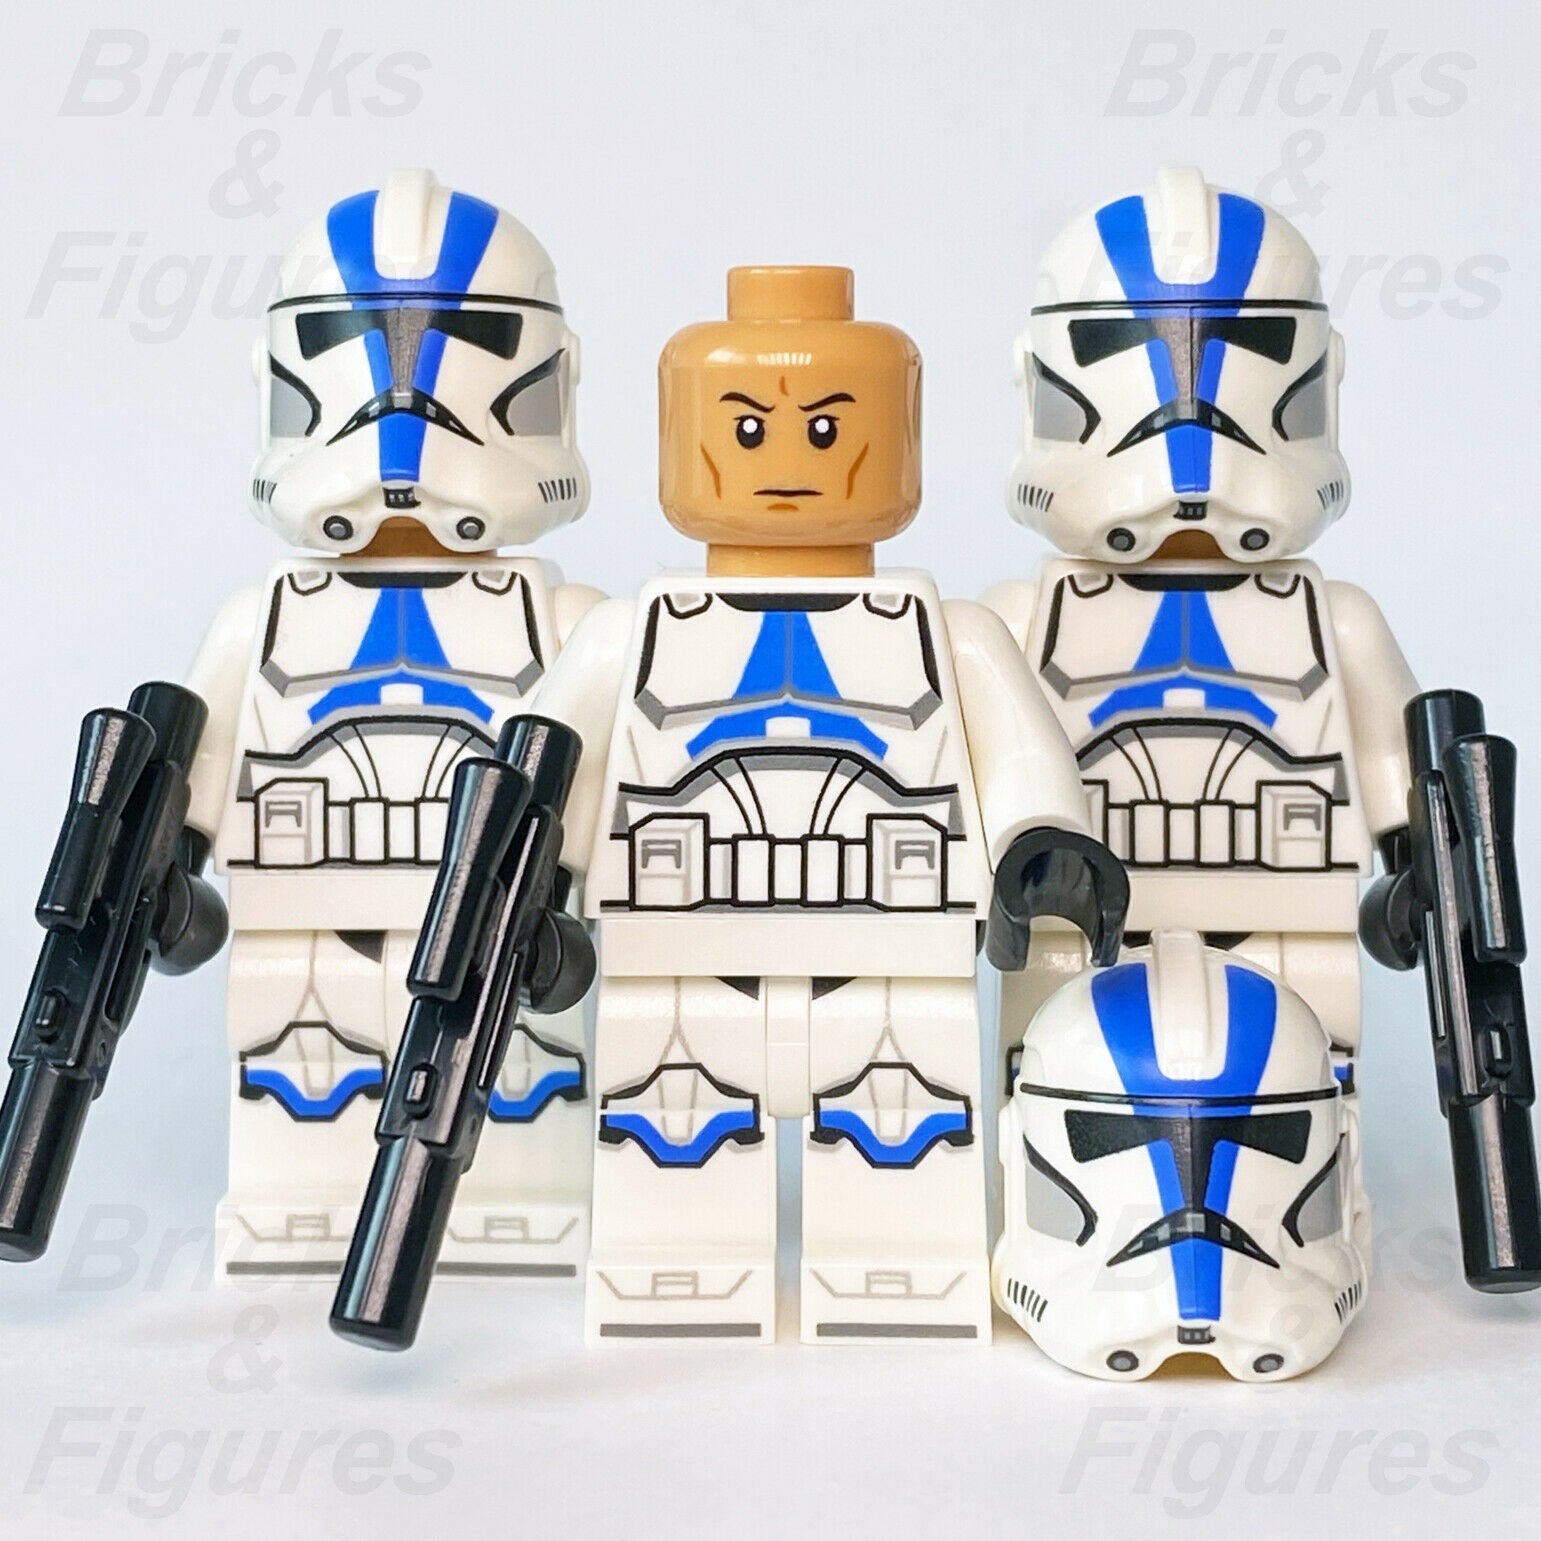 3 x New Star Wars LEGO 501st Legion Clone Trooper Episode 3 Minifigures 75280 - Bricks & Figures